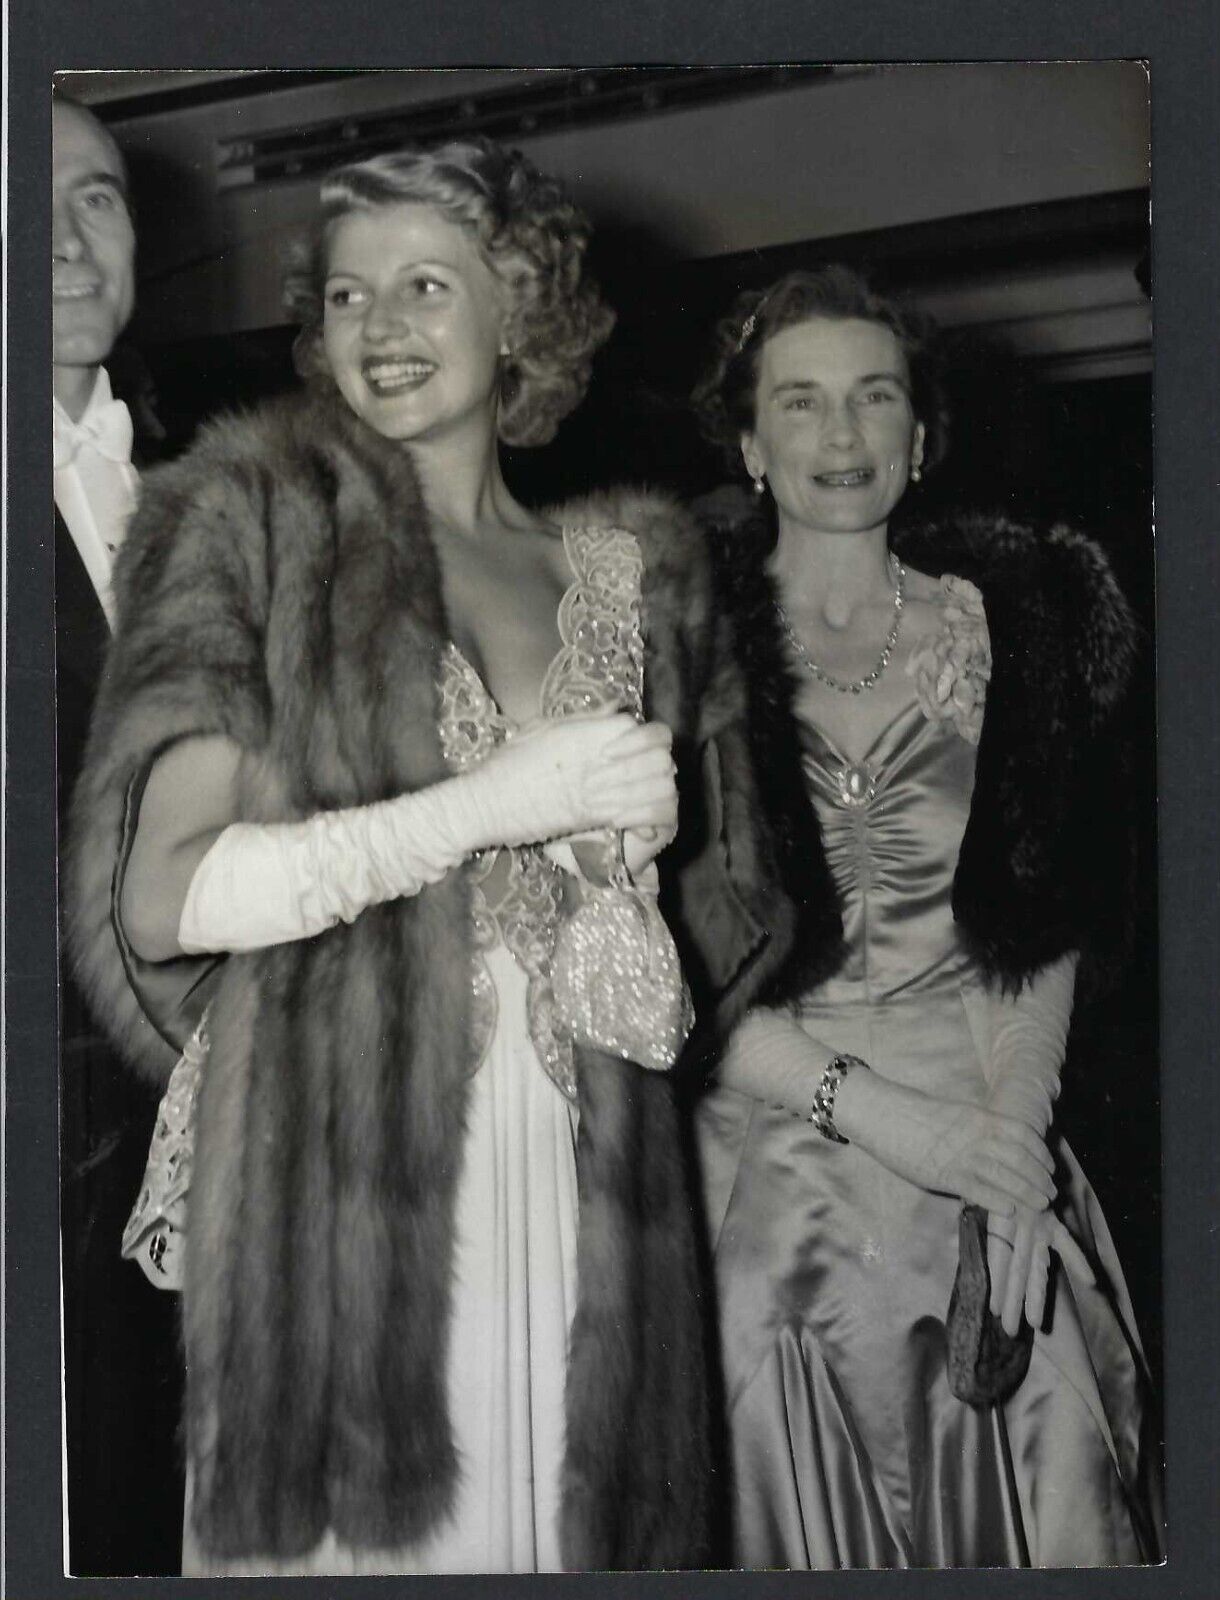 RITA HAYWORTH HOLLYWOOD ACTRESS 1947 VINTAGE ORIGINAL PRESS PHOTO